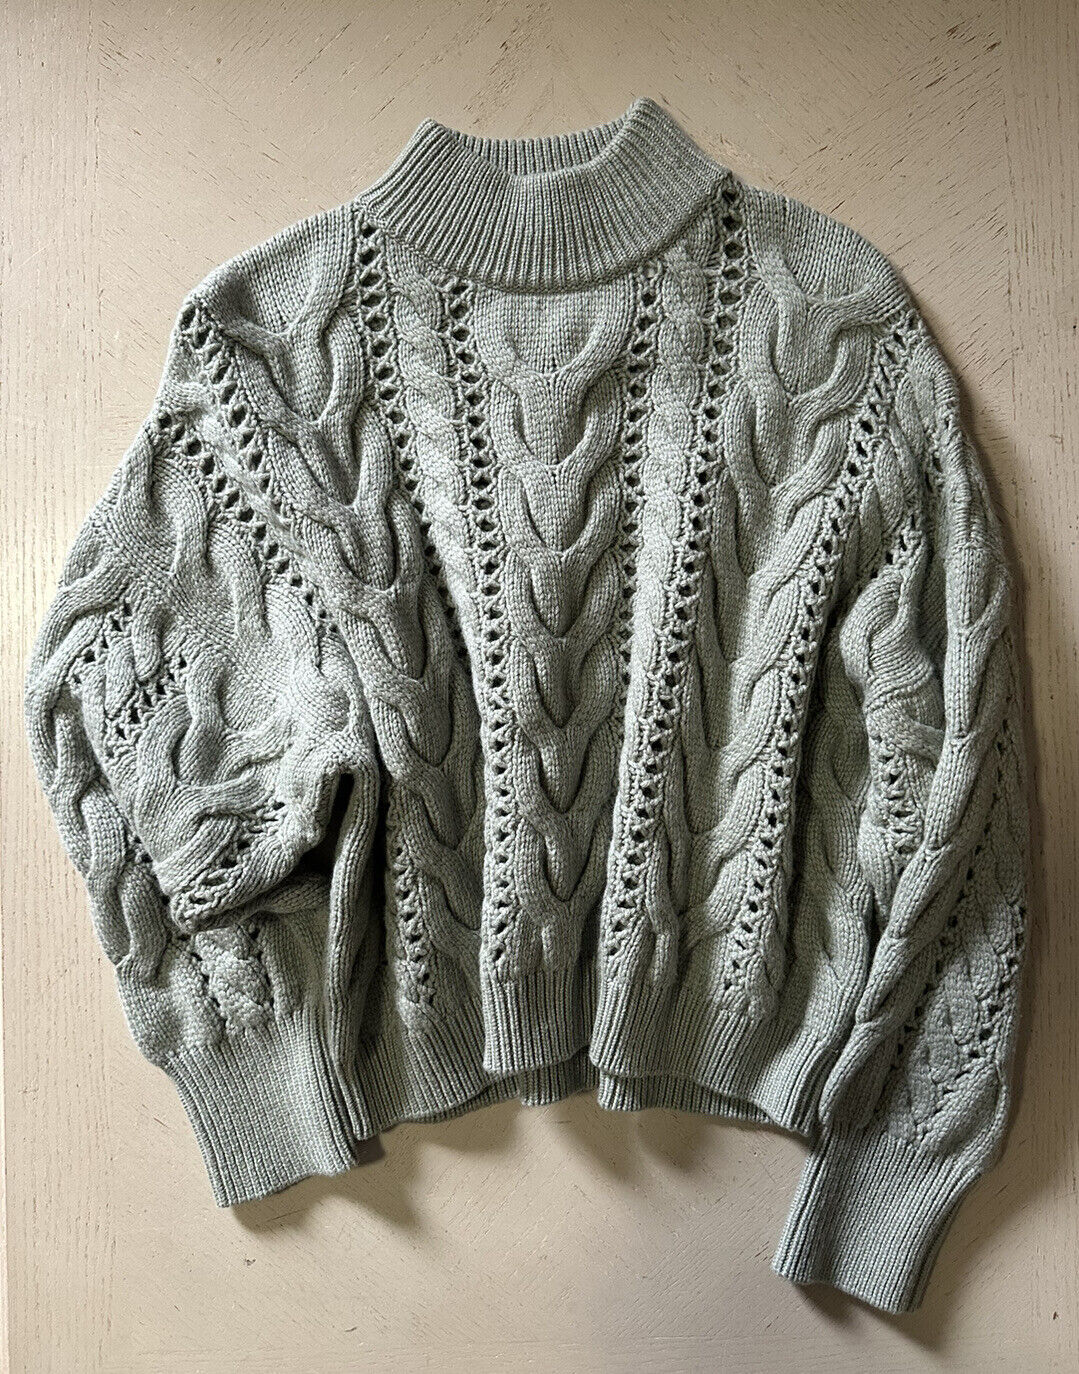 New $2995 Brunello Cucinelli Women Virgin Wool Blend Cable Knit Sweater Green L